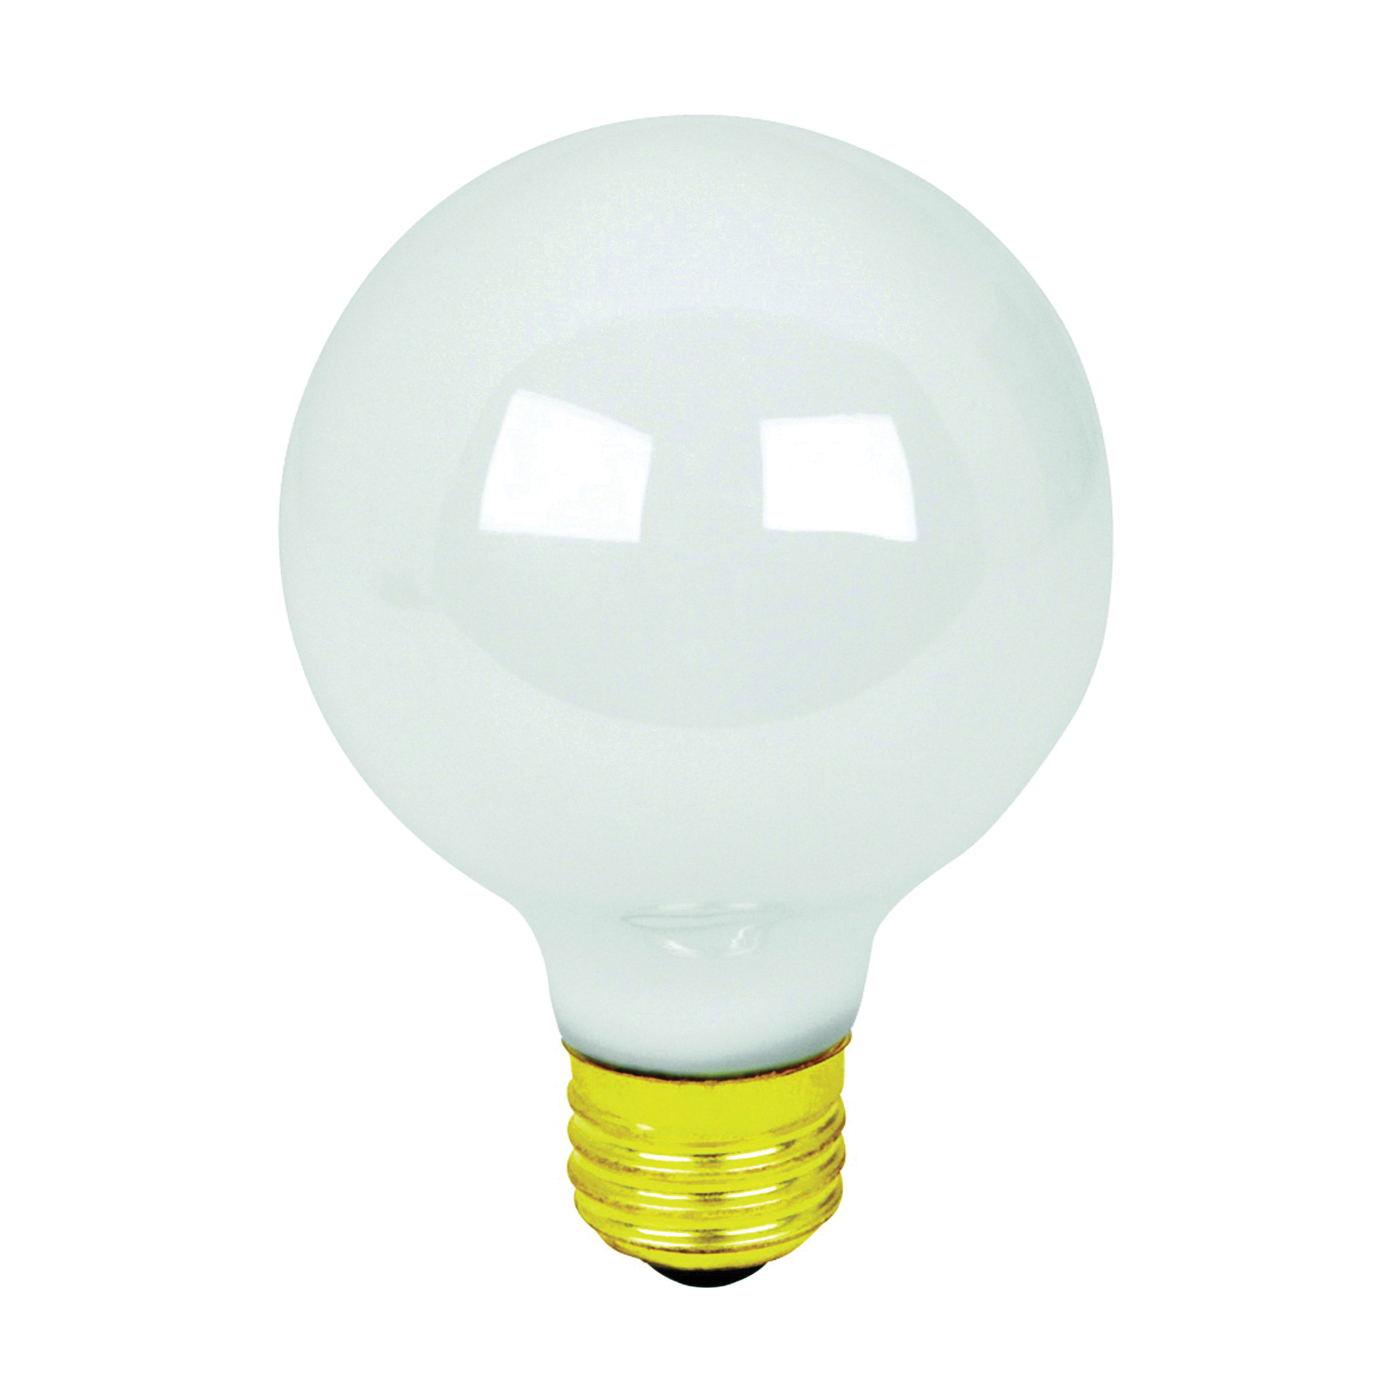 Q40G25/W Halogen Bulb, 40 W, Medium E26 Lamp Base, G25 Lamp, 600 Lumens, 3000 K Color Temp